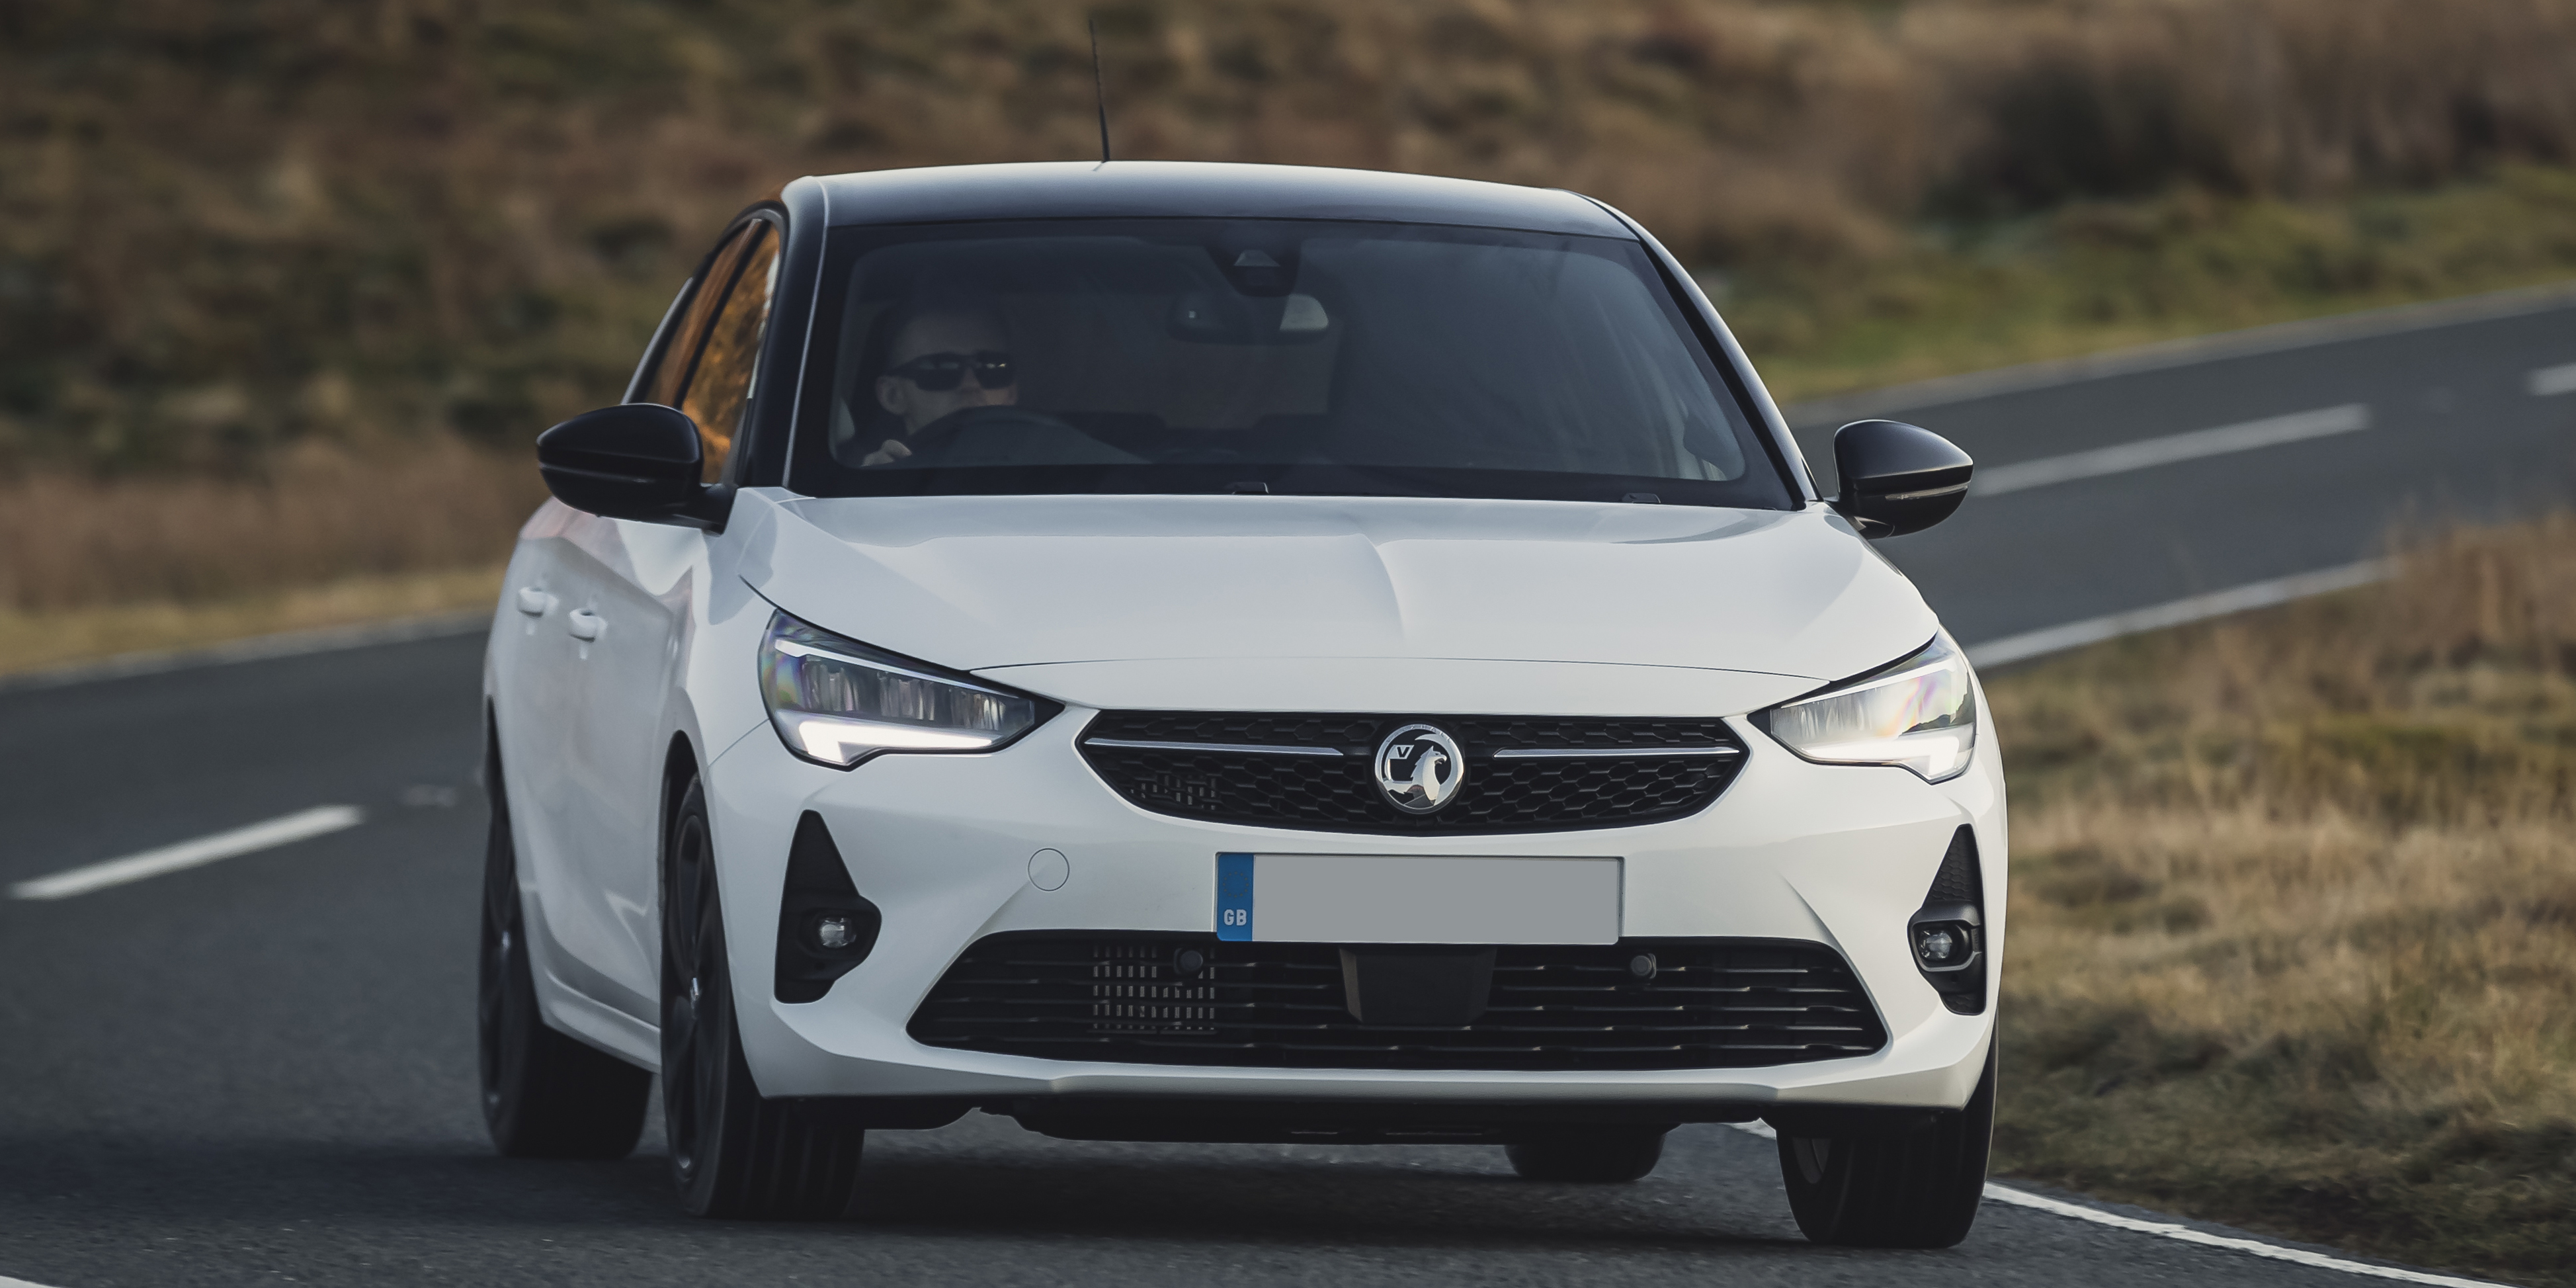 2019 Opel Corsa GSi Review